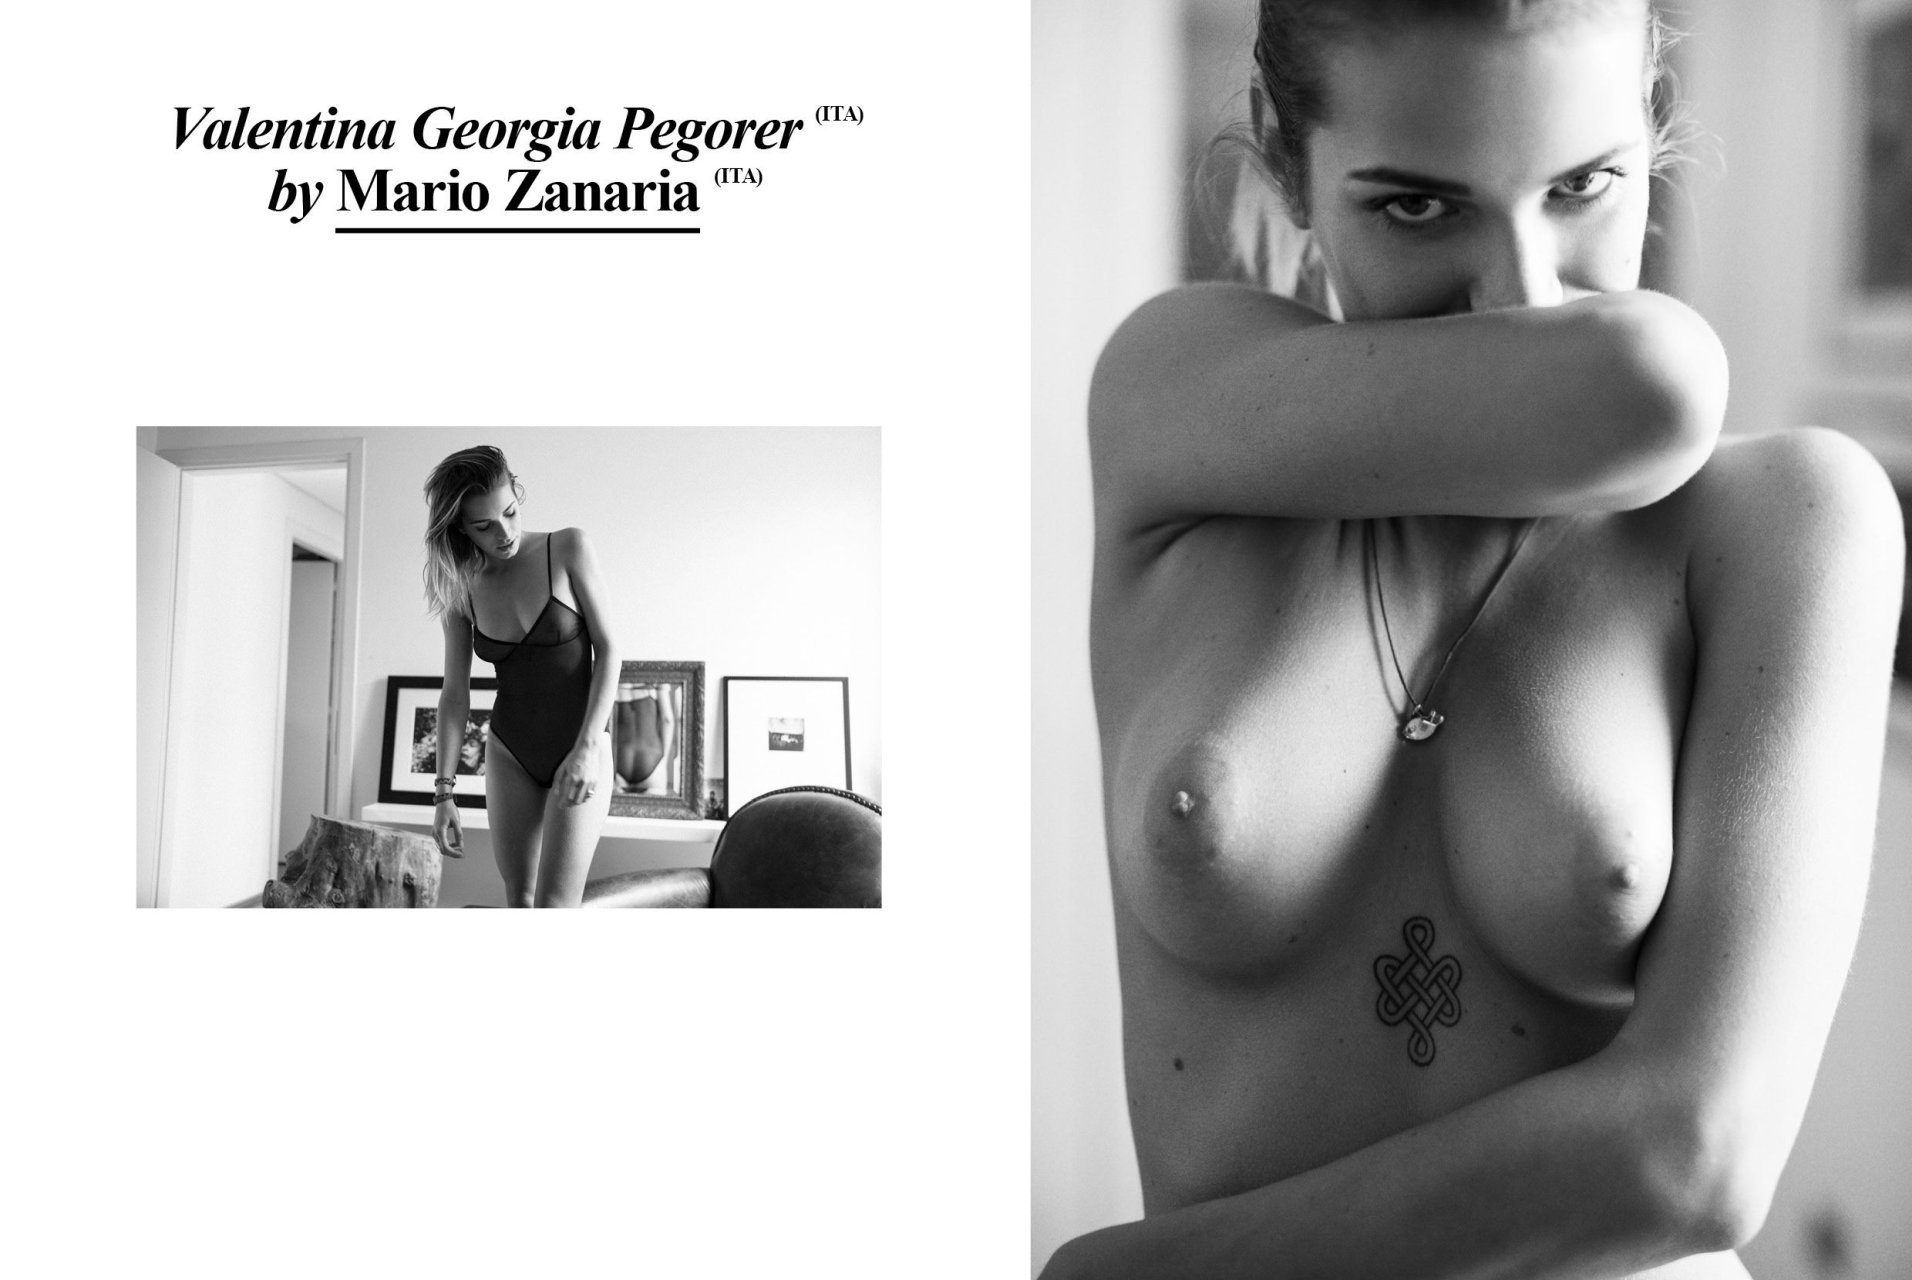 Giorgia whigham naked - 🧡 Джорджия уигхэм голая (61 фото) - скачать картин...